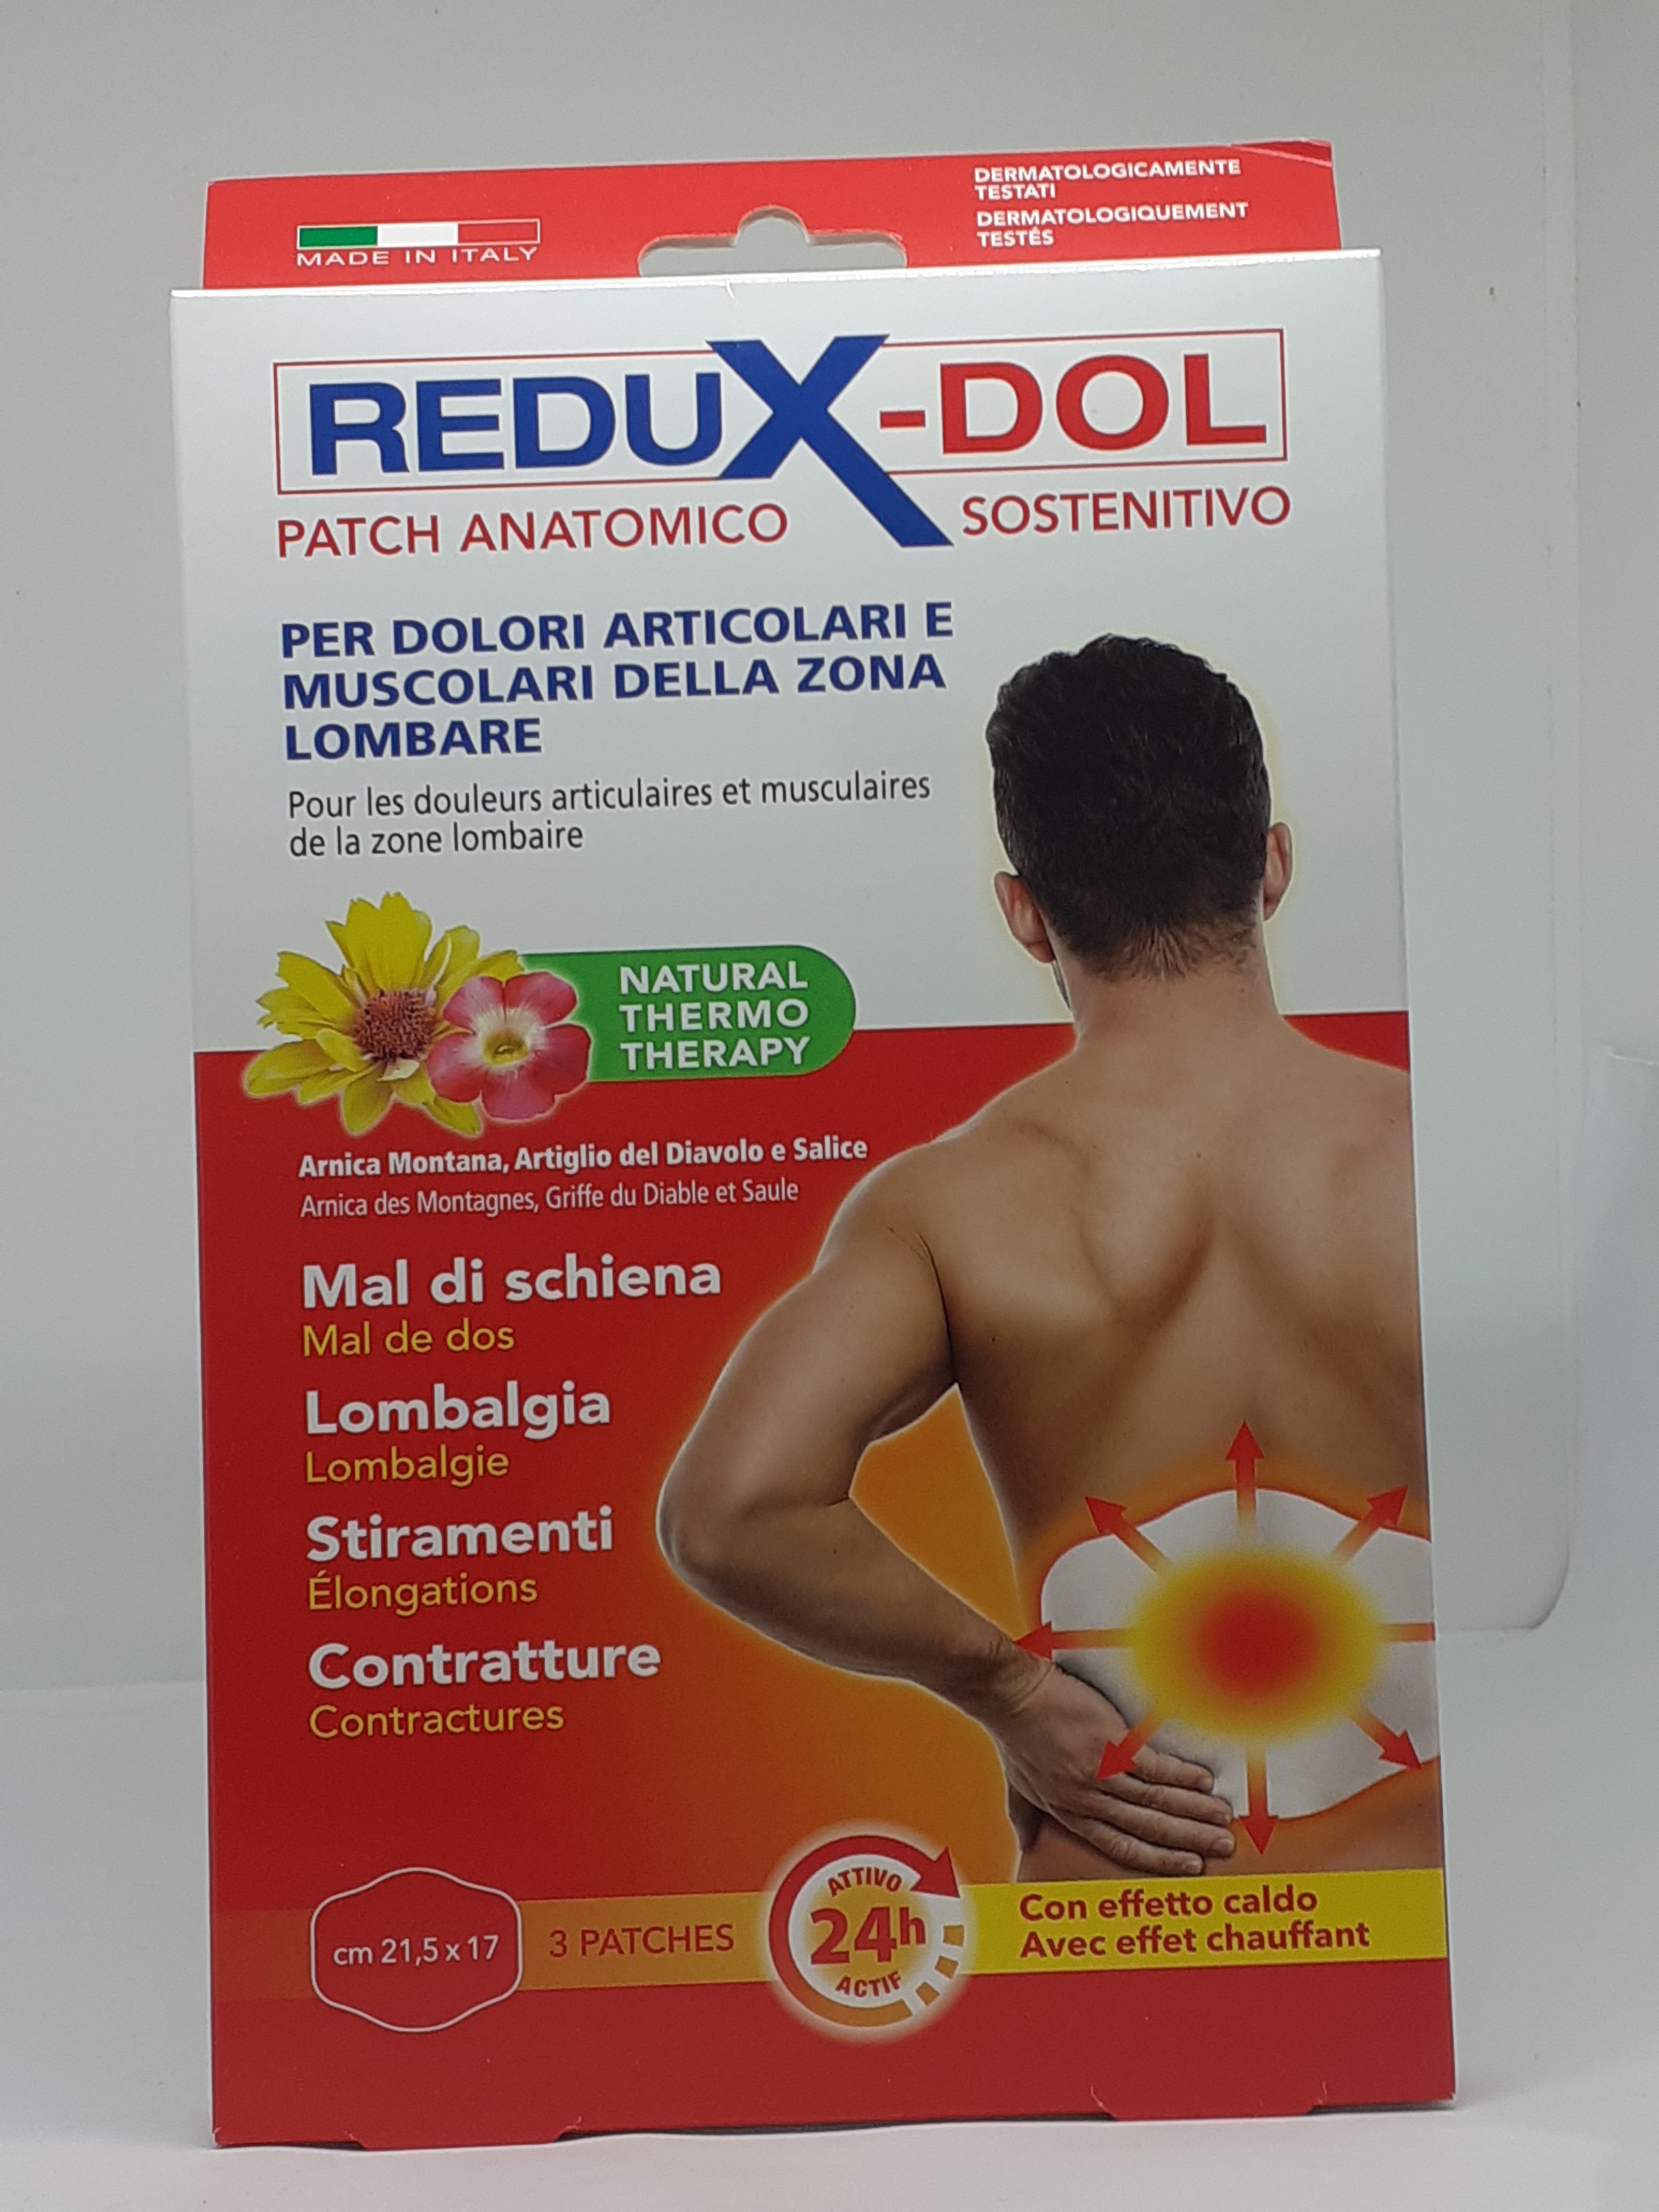 REDUX-DOL patch anatomico zona Lombare, 24h